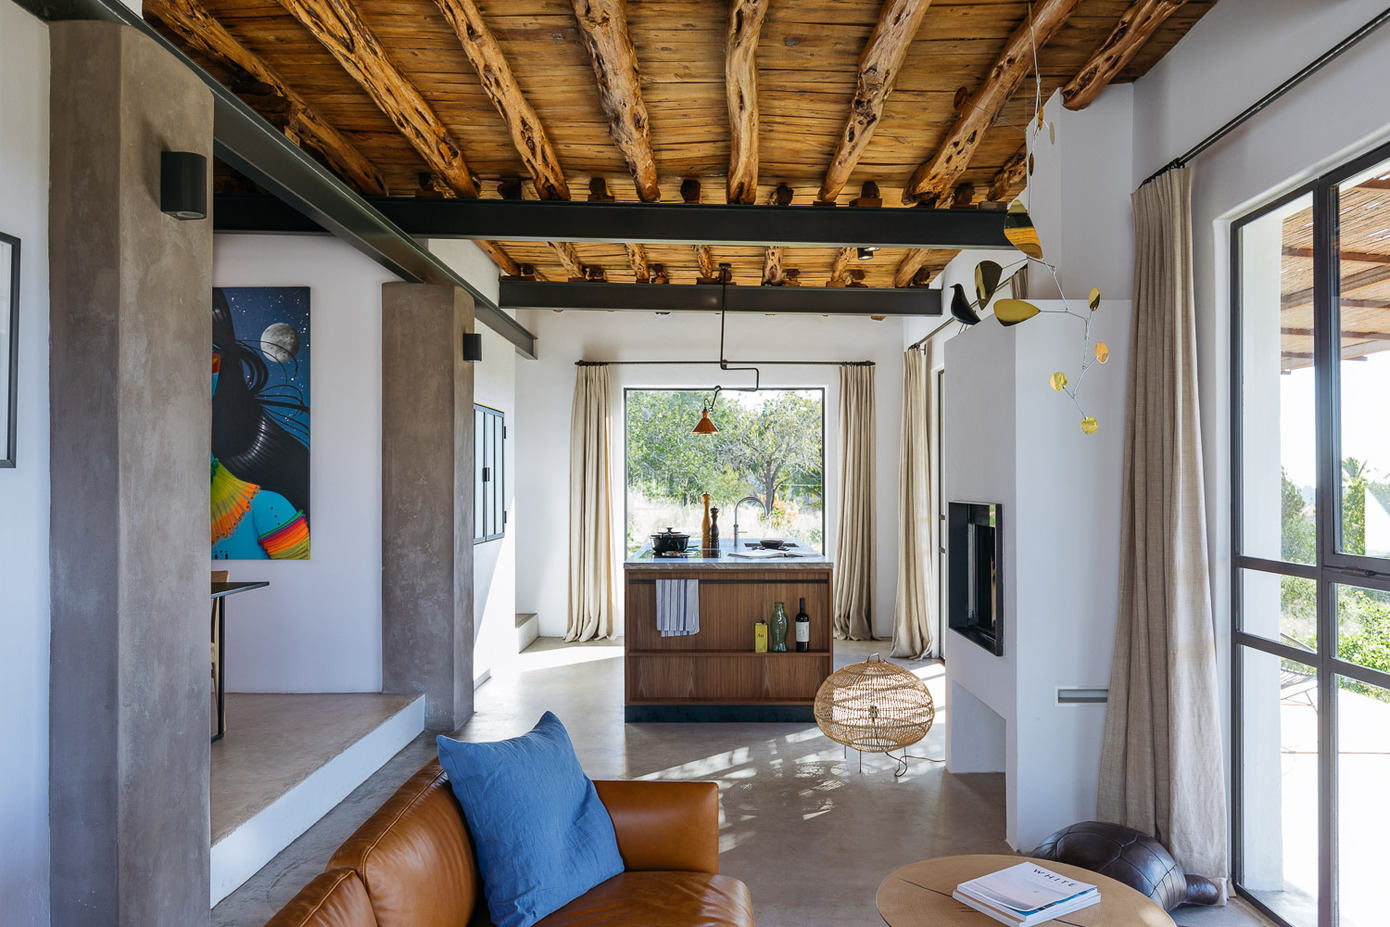 Ibiza Campo – Loft: A Rustic-Industrial Retreat